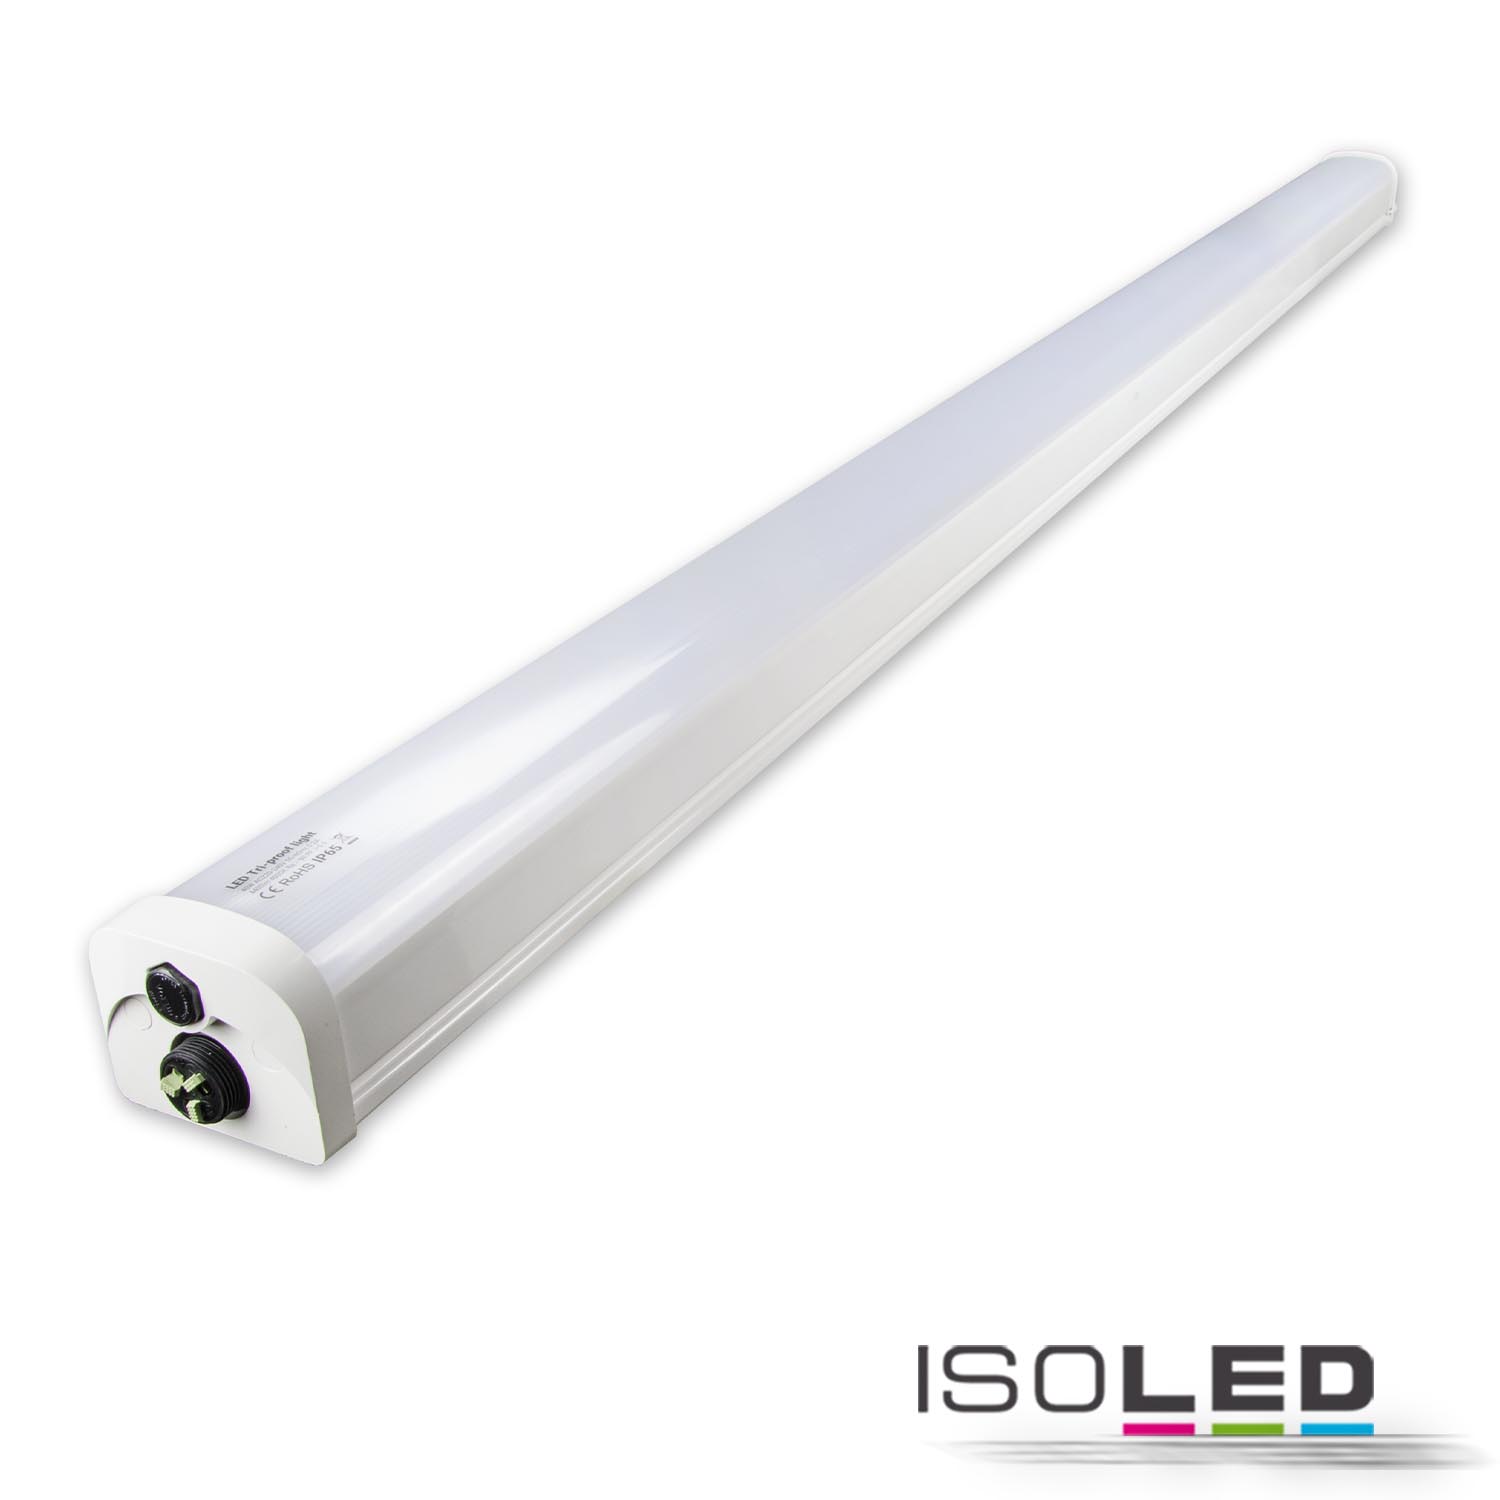 ISOLED 115152 LED Linearleuchte Professional 120cm 40W, IP66, neutralweiß, DALI dimmbar